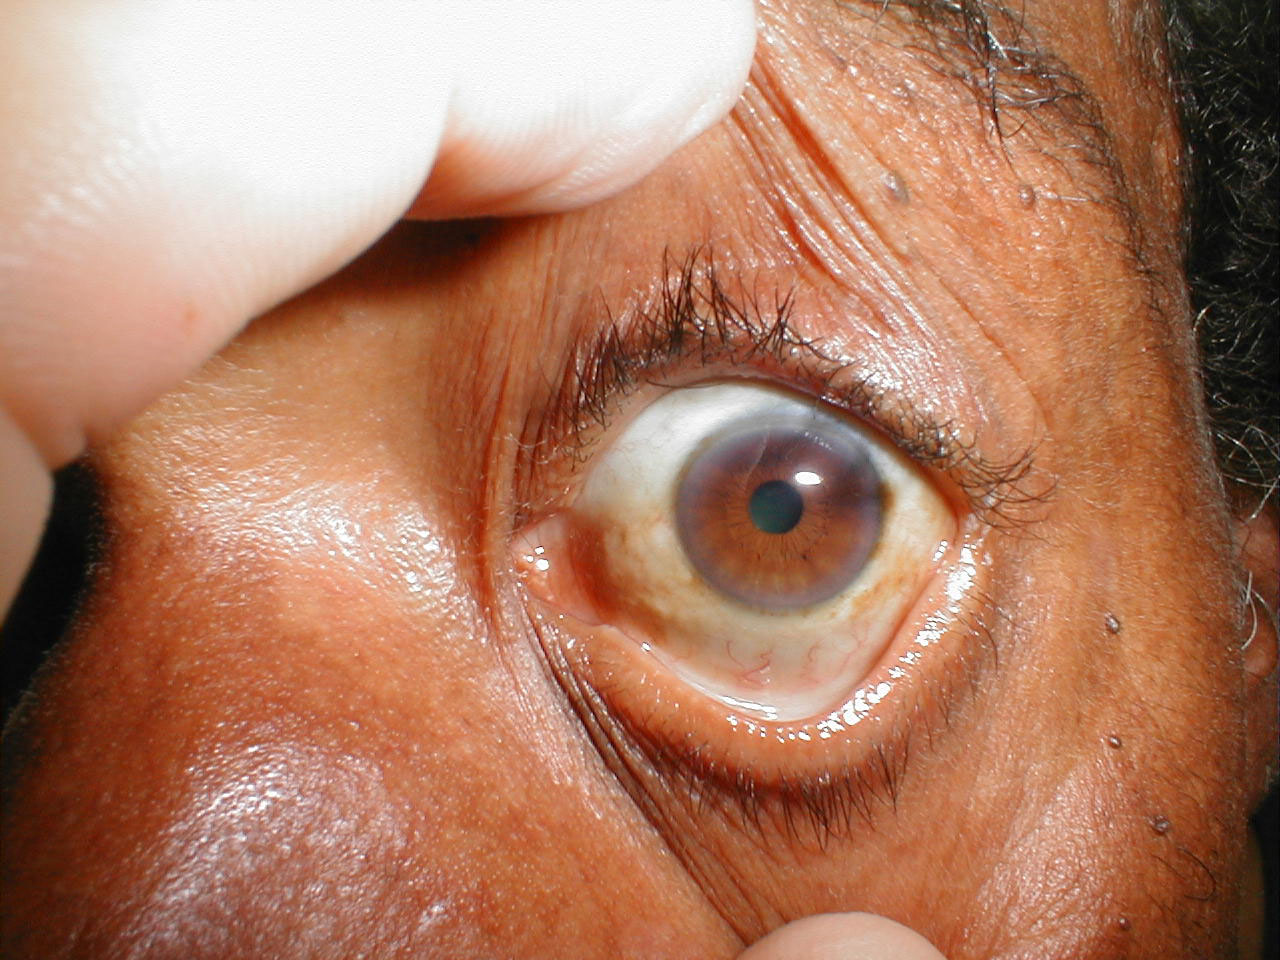 eyes-muddy brown sclera